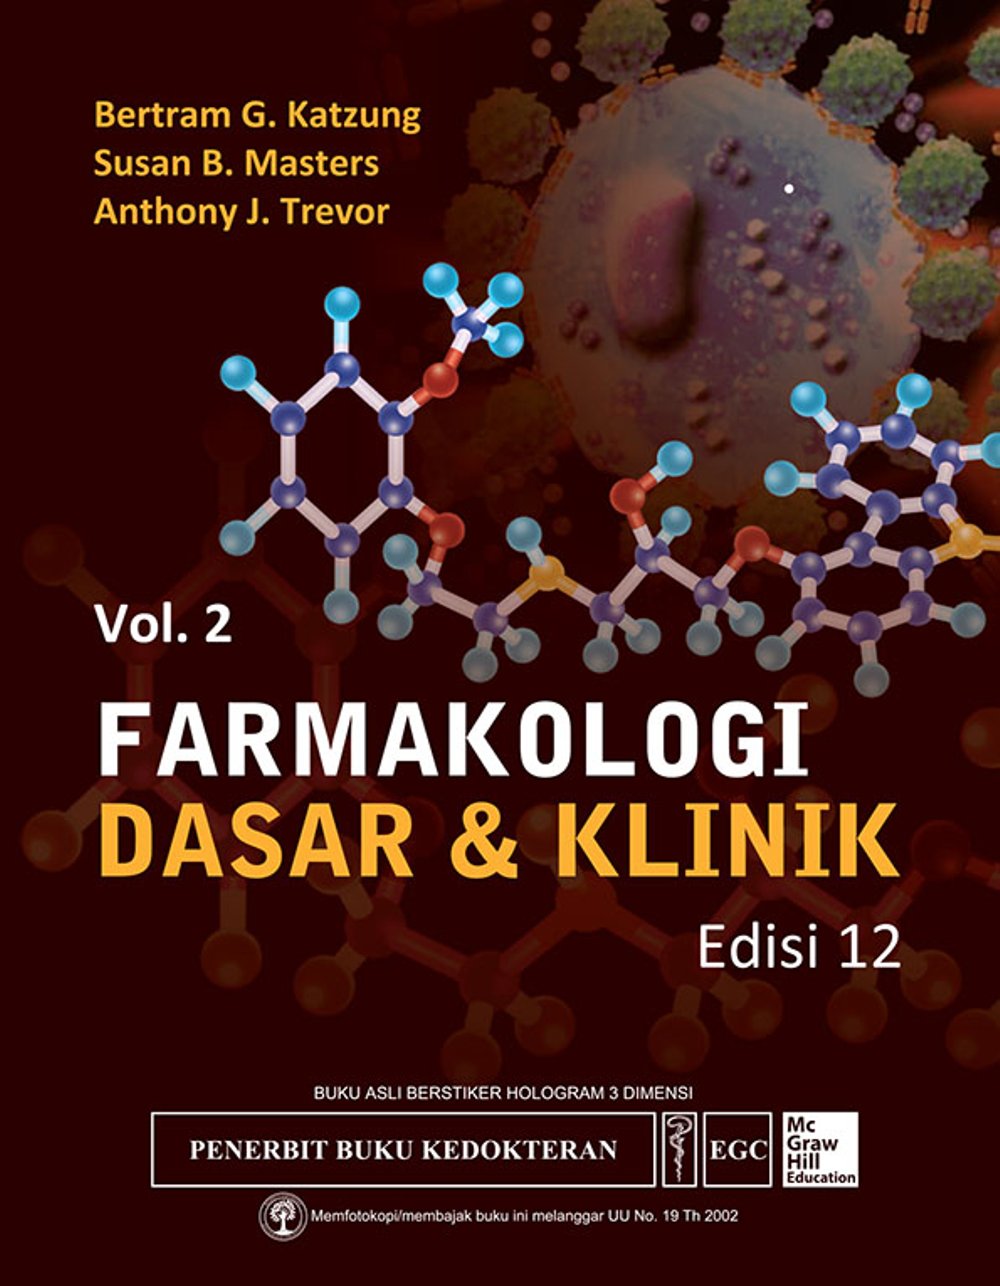 Farmakologi Dasar & klinik vol.2